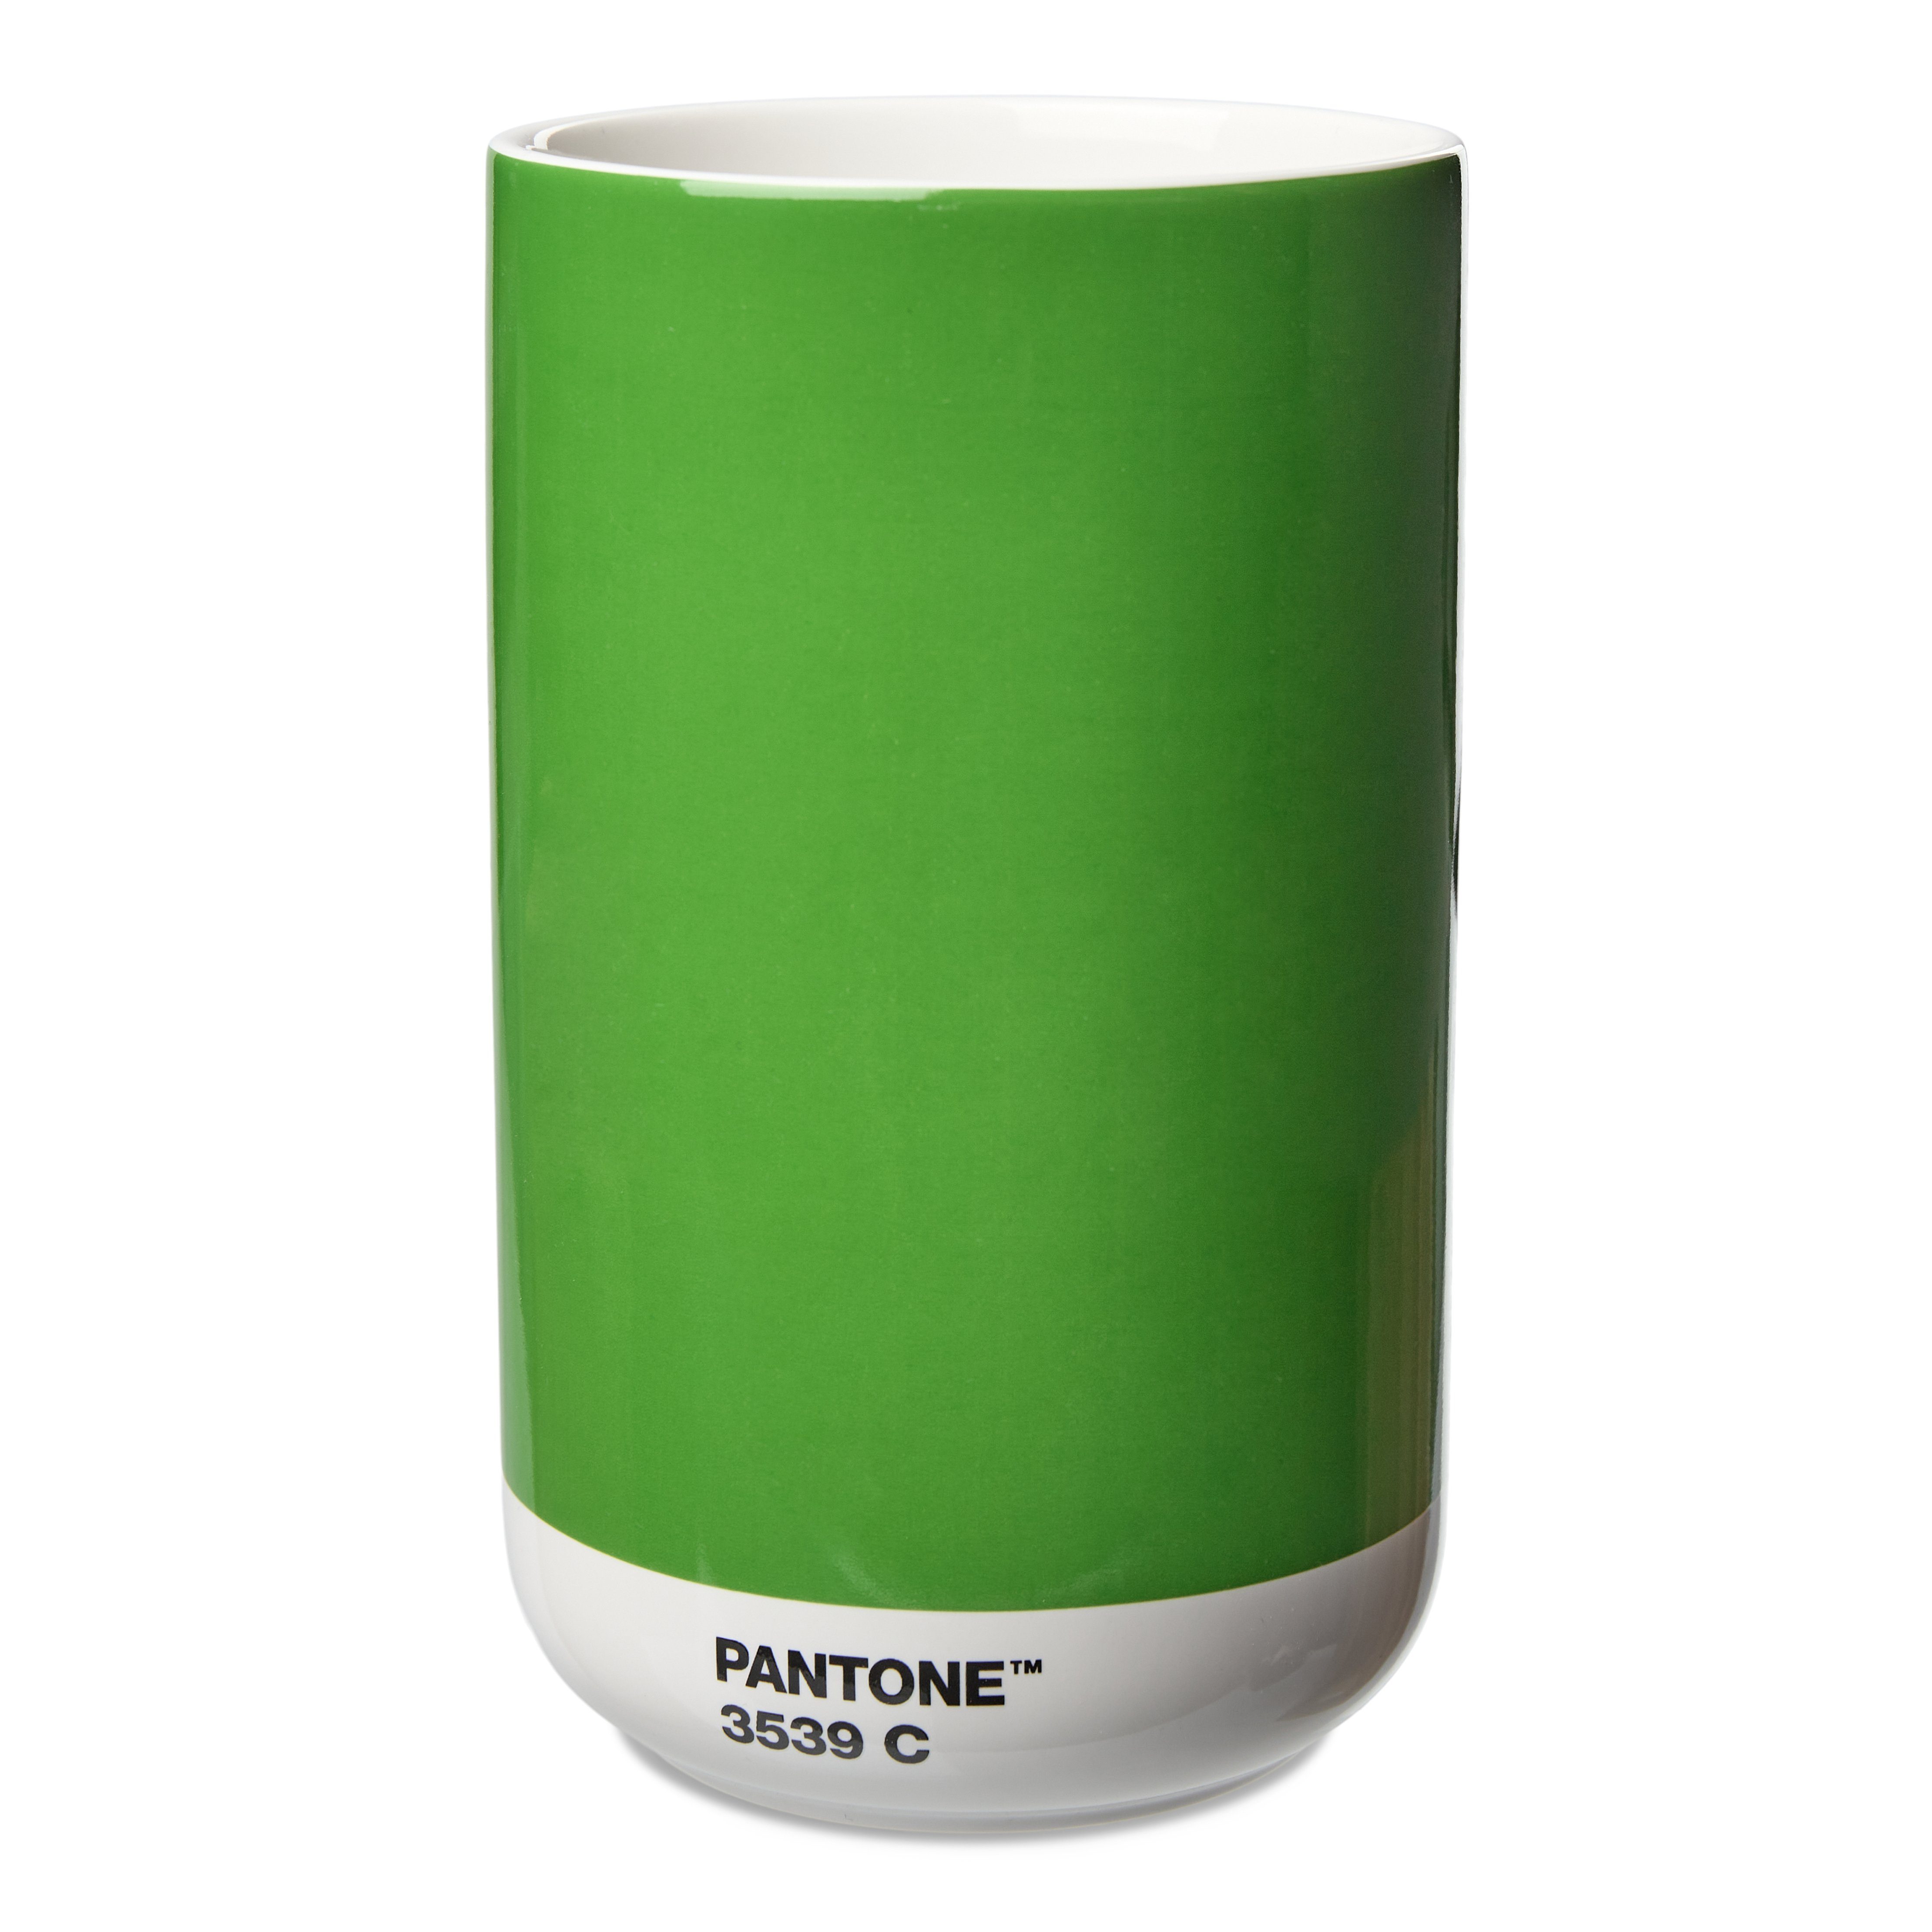 Mini Green PANTONE Vase, 3539 Porzellan 500ml Dekovase C in Geschenkbox,